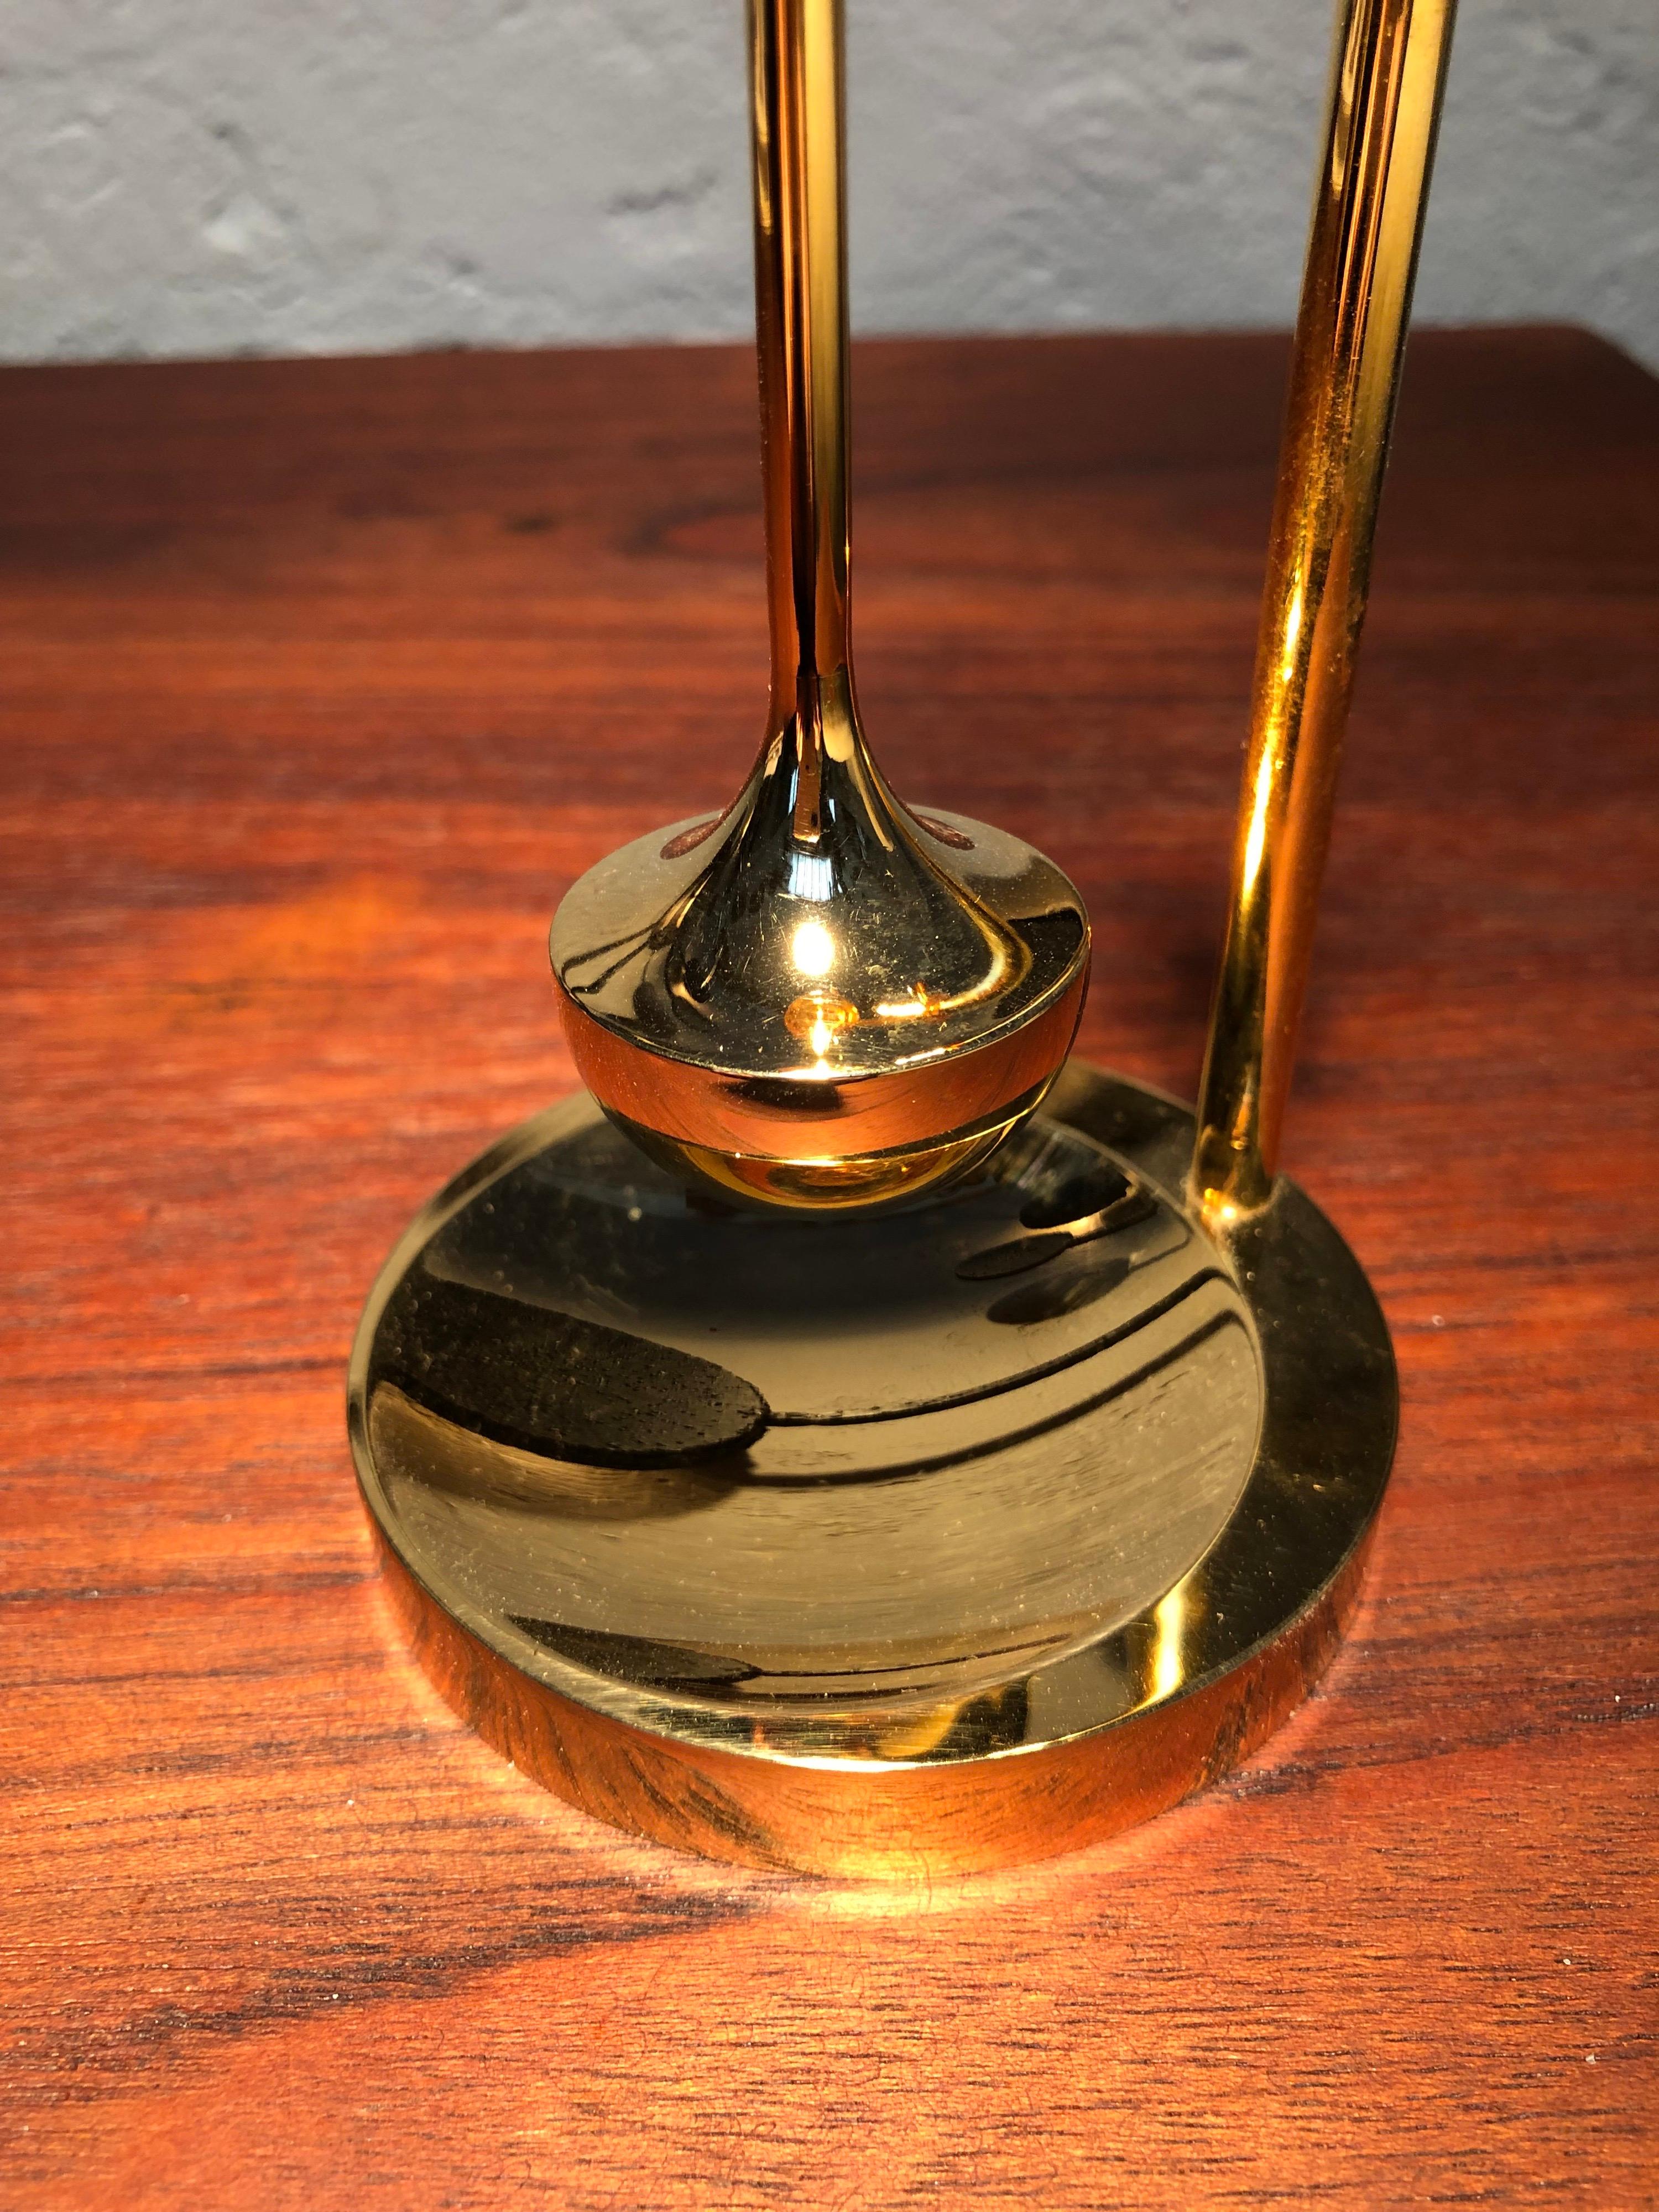 Mid-Century Modern Vintage Unused Oil Lamp by Ilse Ammonsen in 24-Carat Gold Plate